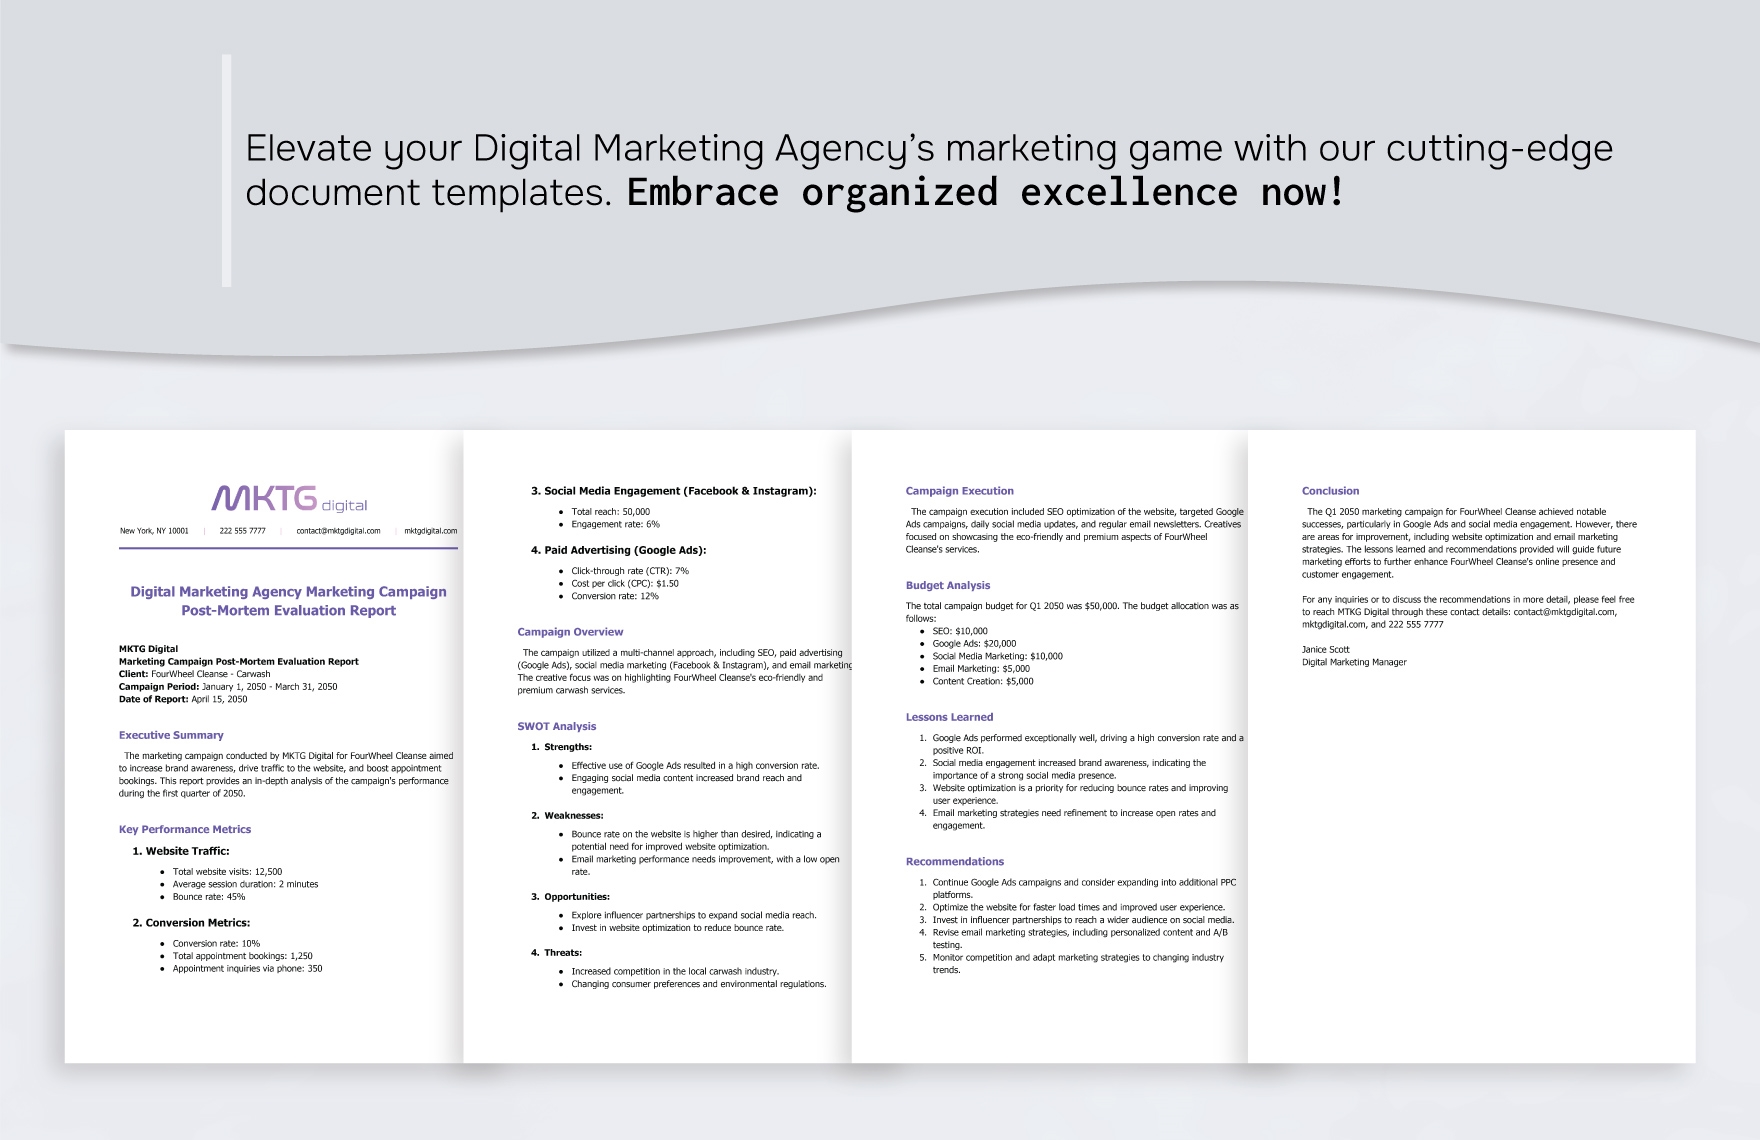 Digital Marketing Agency Marketing Campaign Post-Mortem Evaluation Report Template